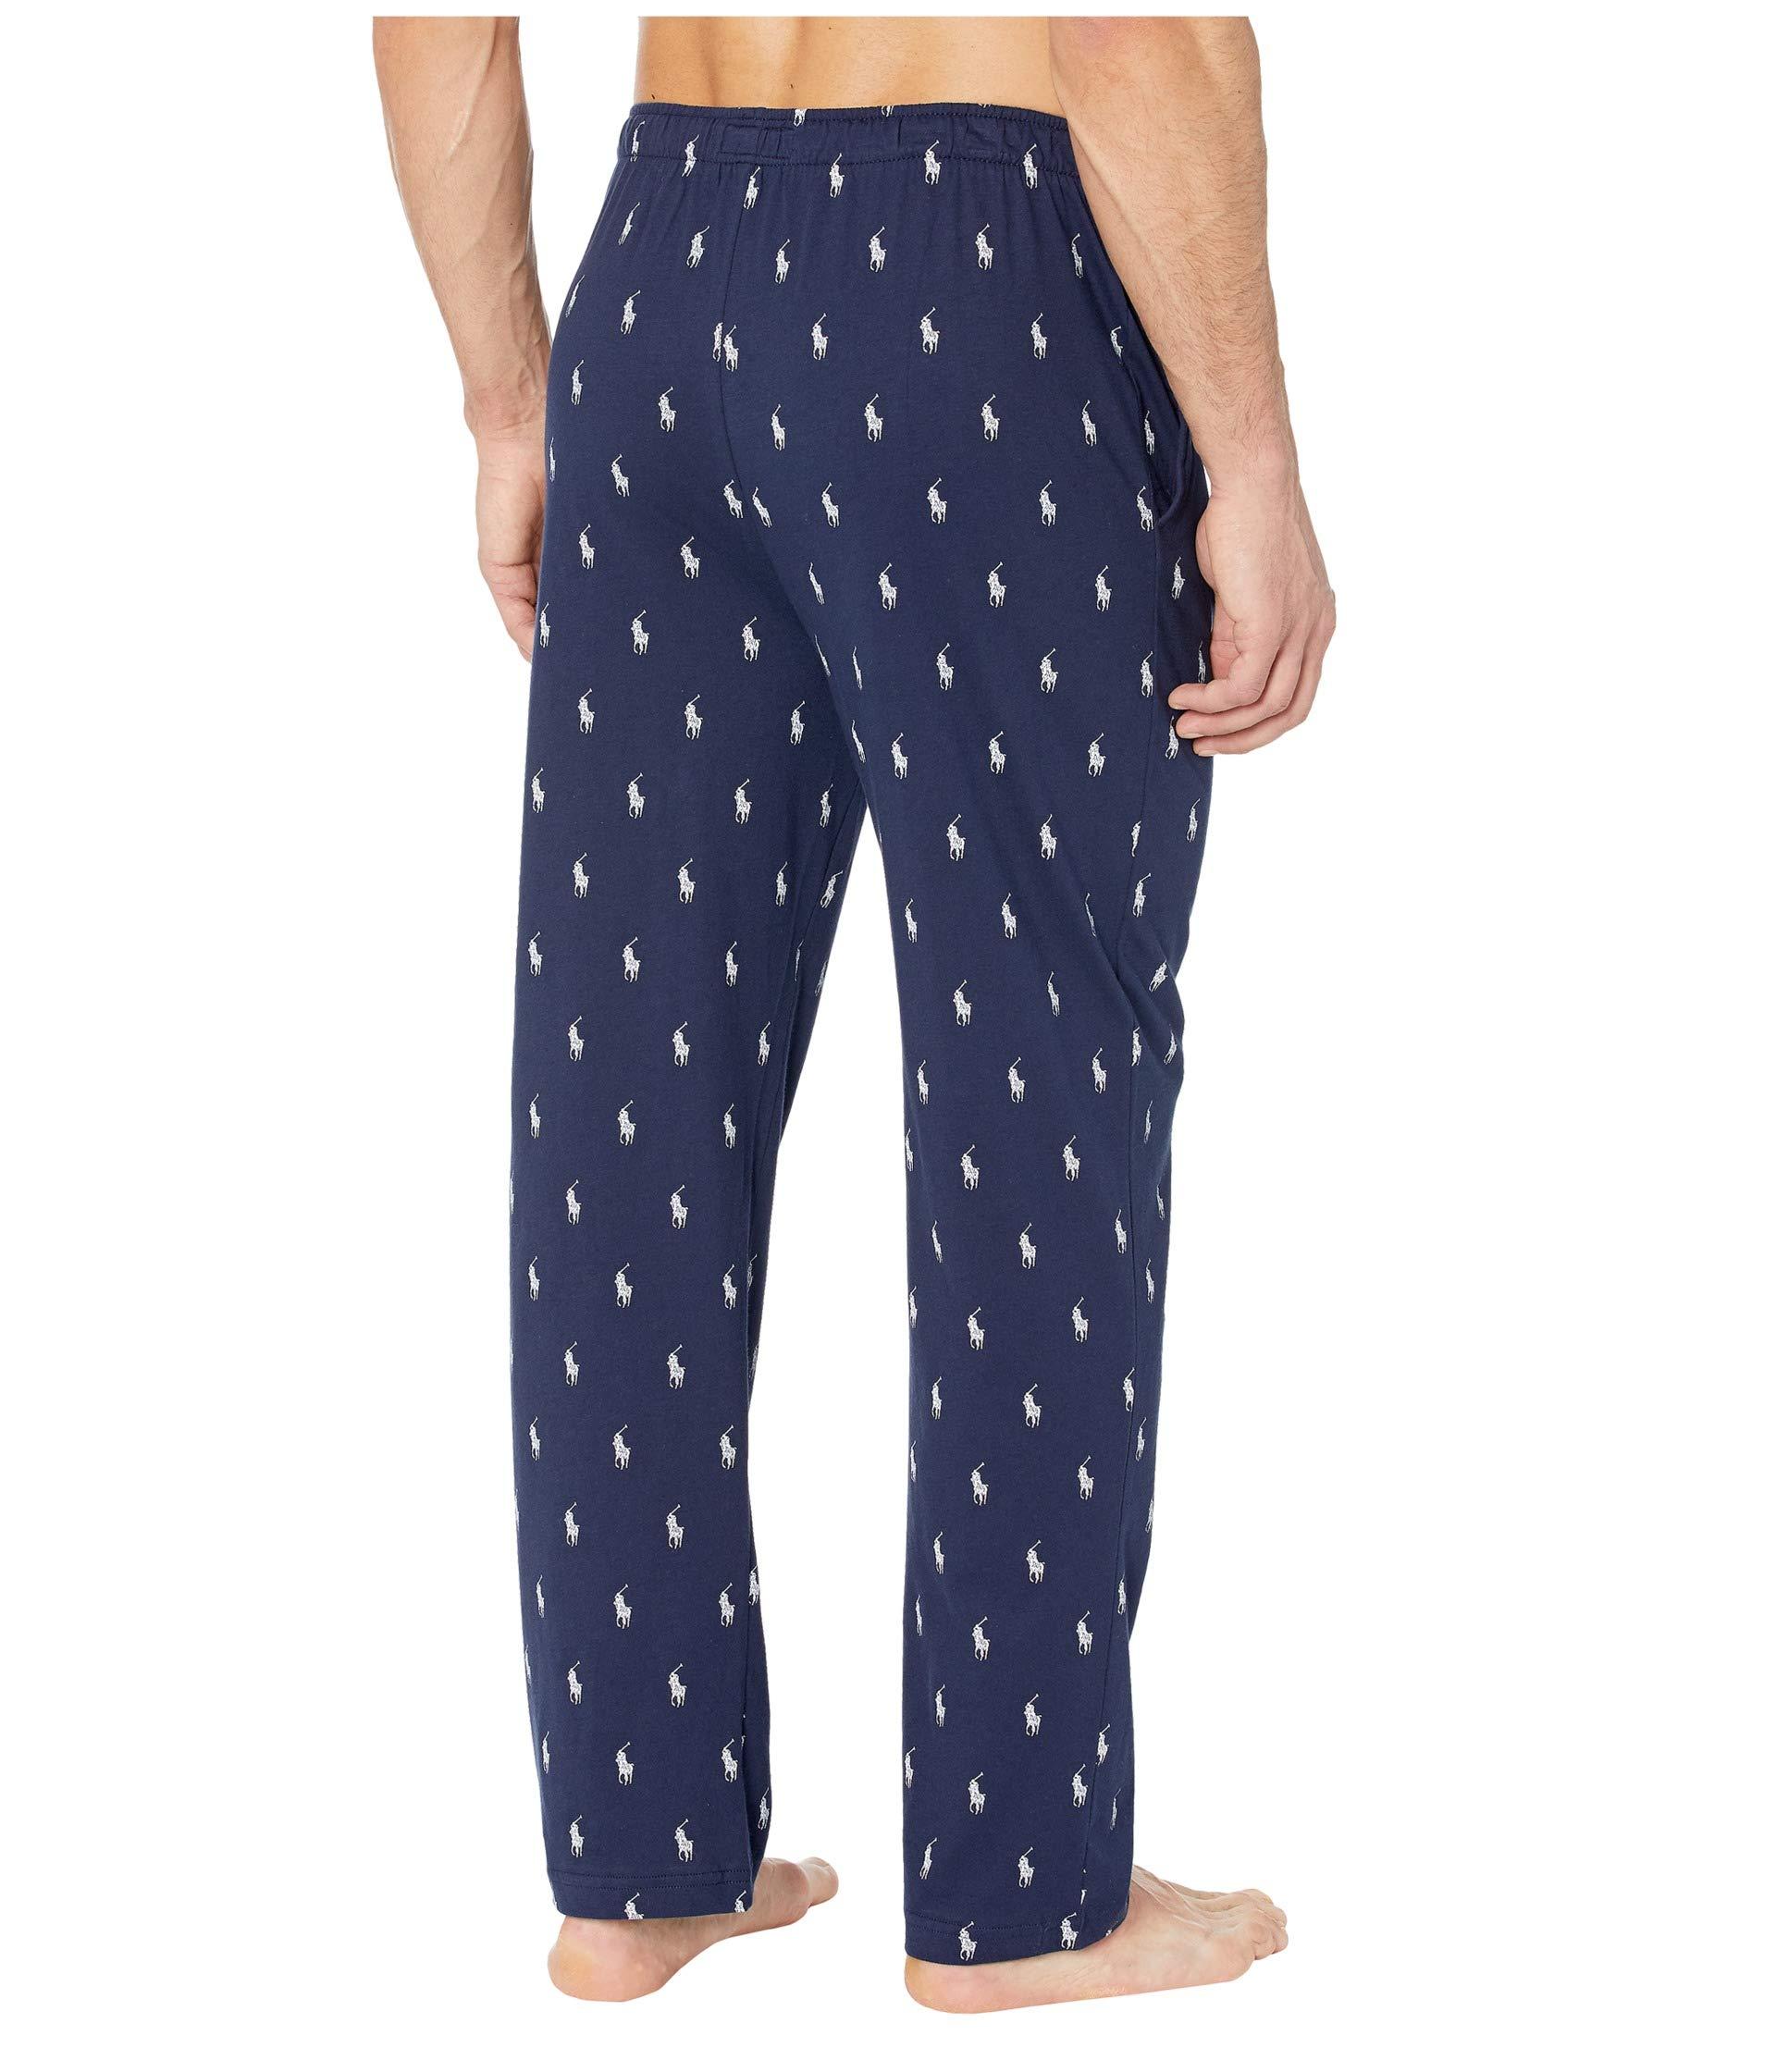 Polo Ralph Lauren Cotton Aopp Pajama Pants in Navy (Blue) for Men - Lyst